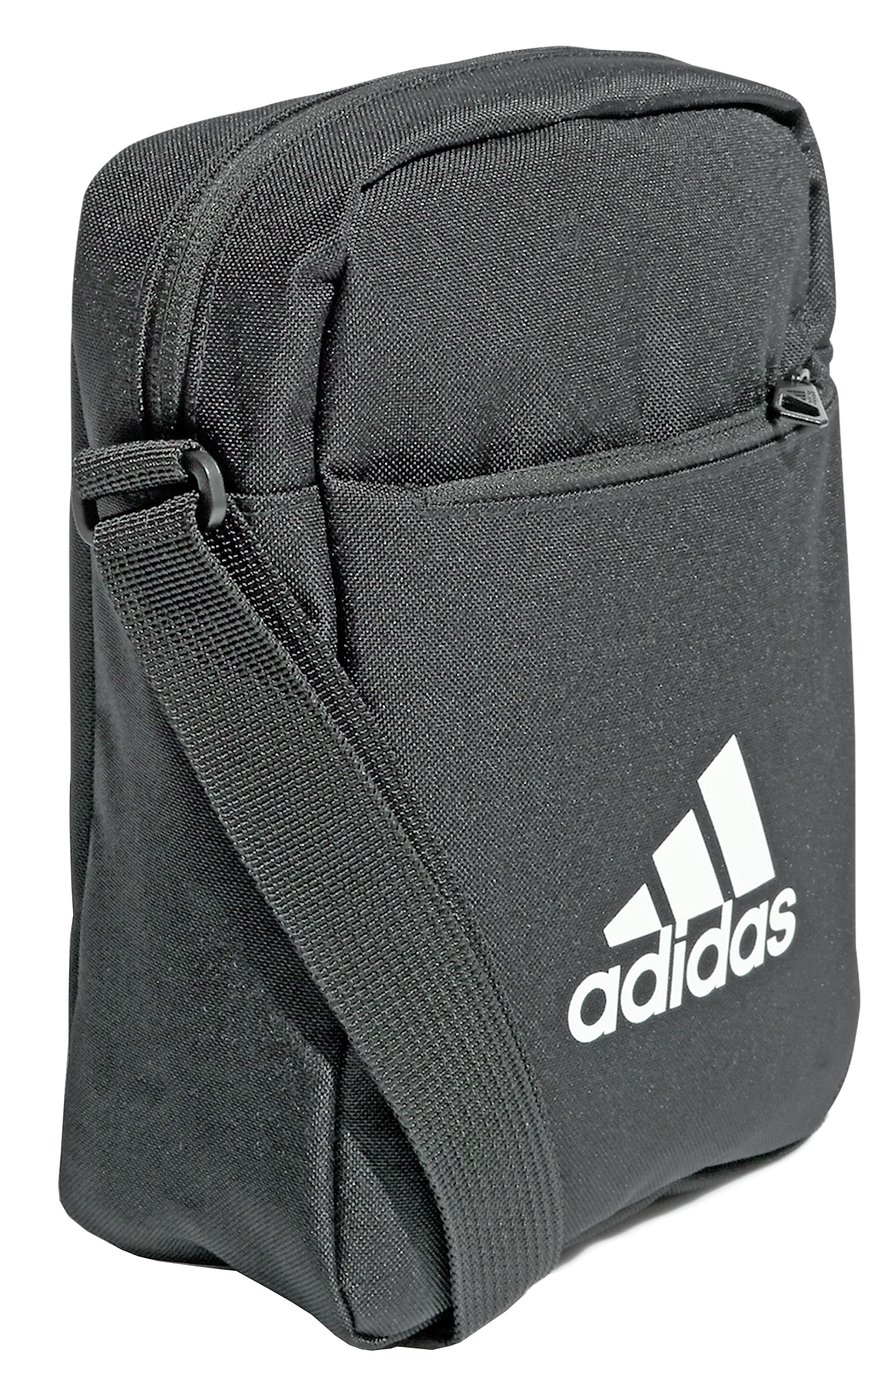 Adidas 2L Mini Messenger Bag Reviews - Updated April 2022